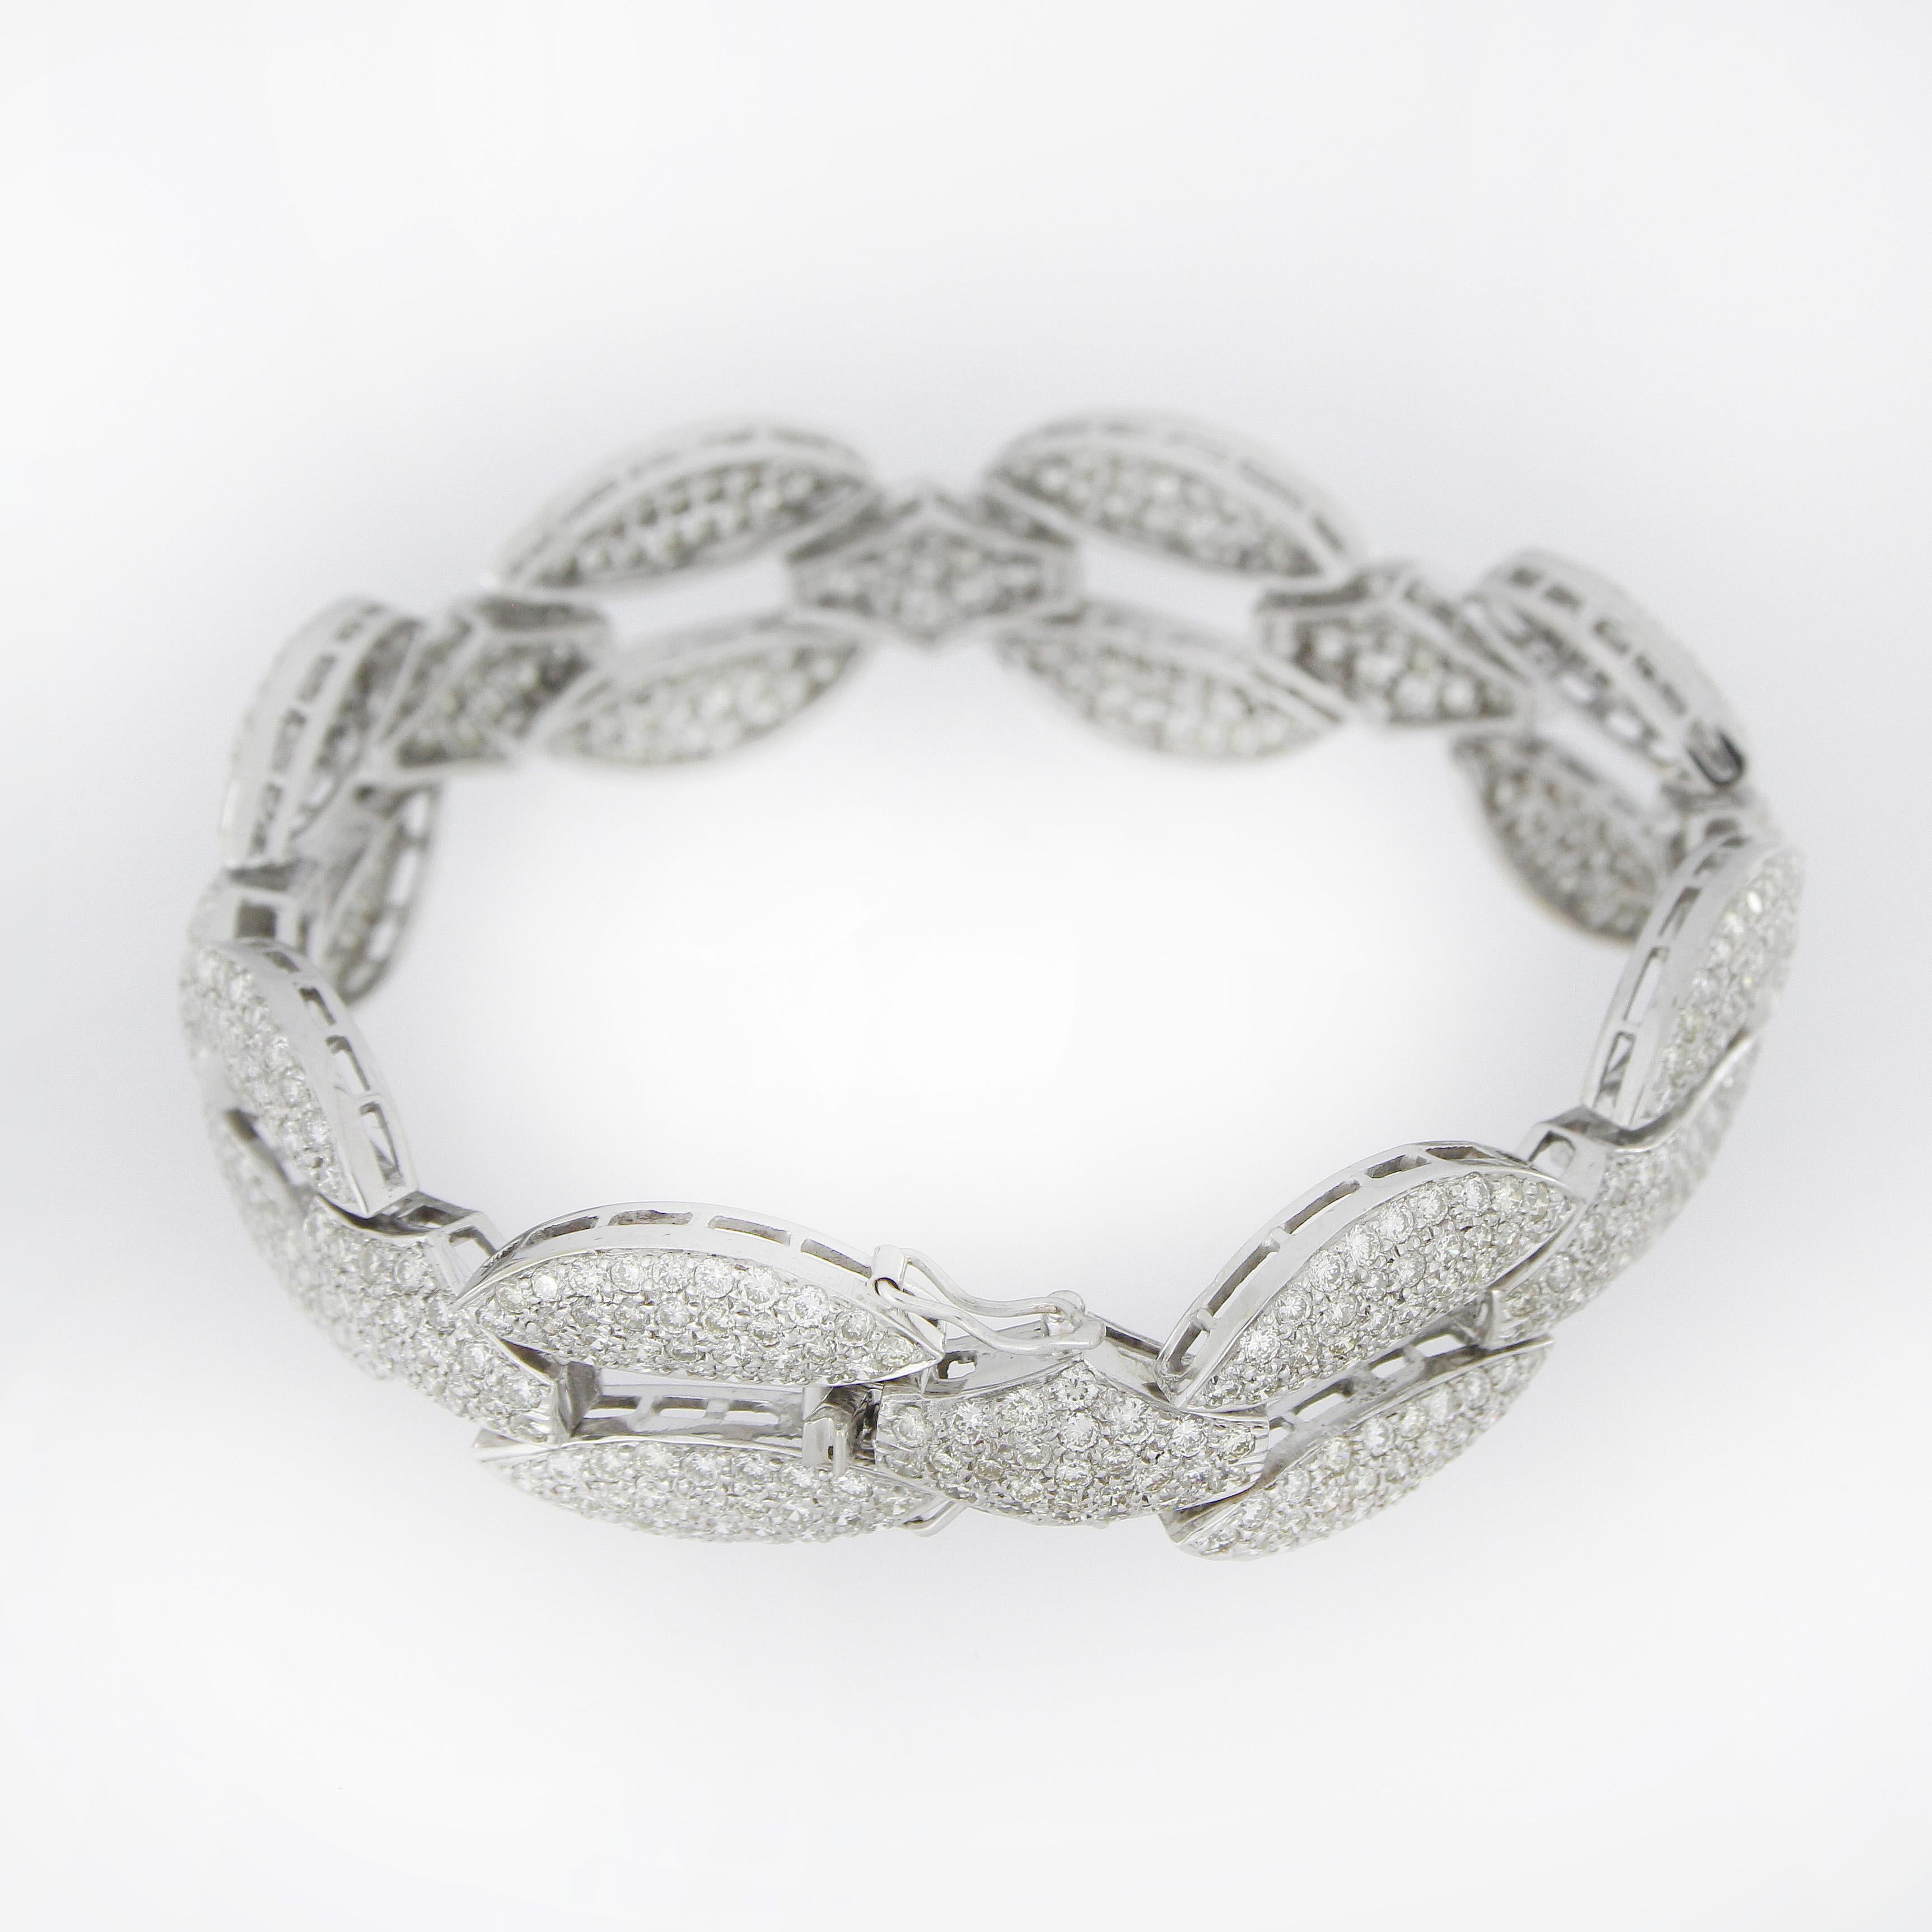 34.6 ct. Diamond Bracelet & Necklace White Gold Jewelry Set For Sale 3